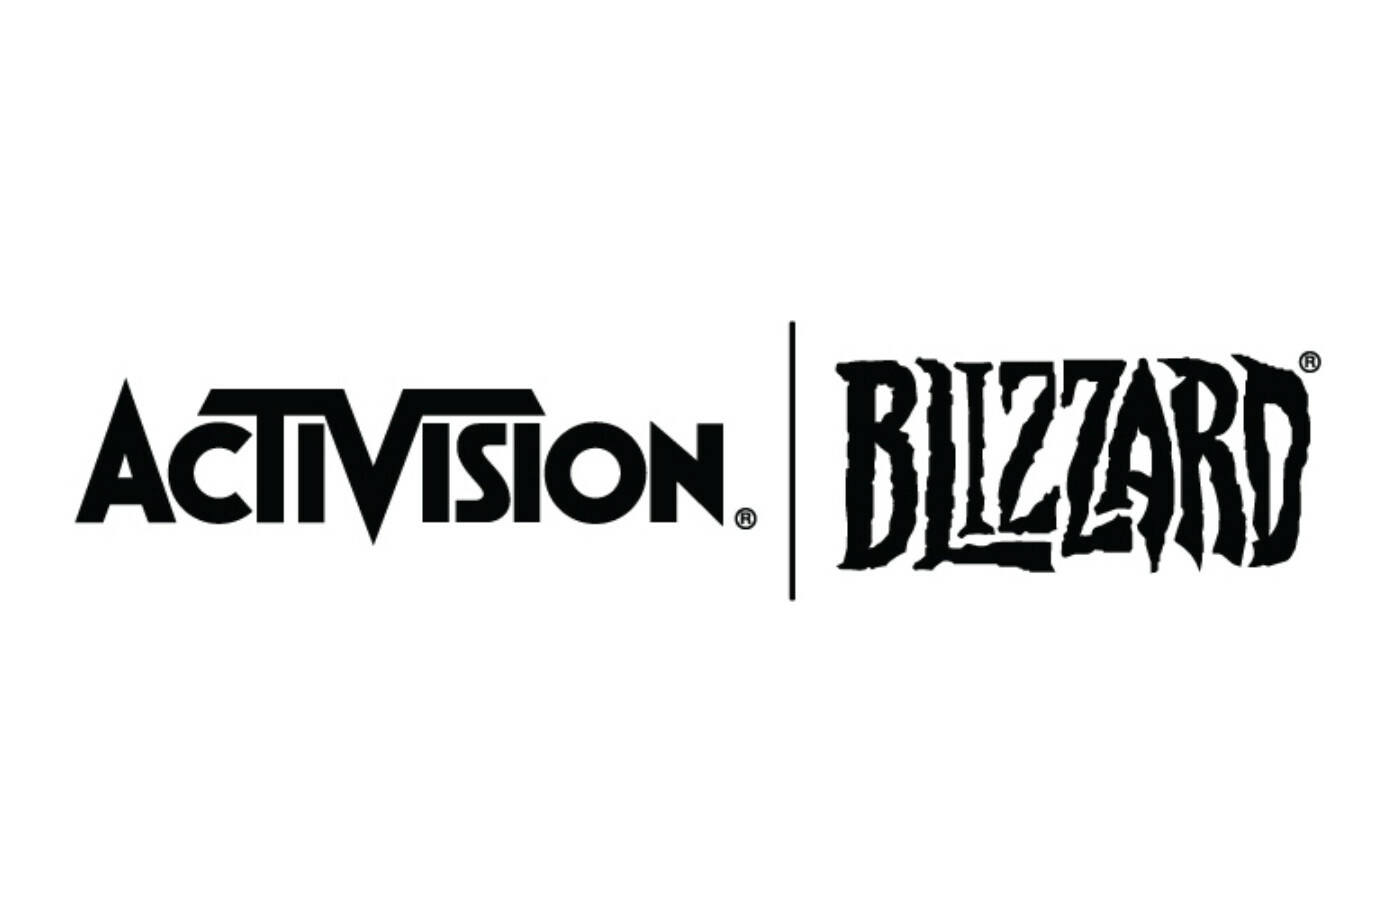 Activision Blizzard lawsuit escalating rapidly.